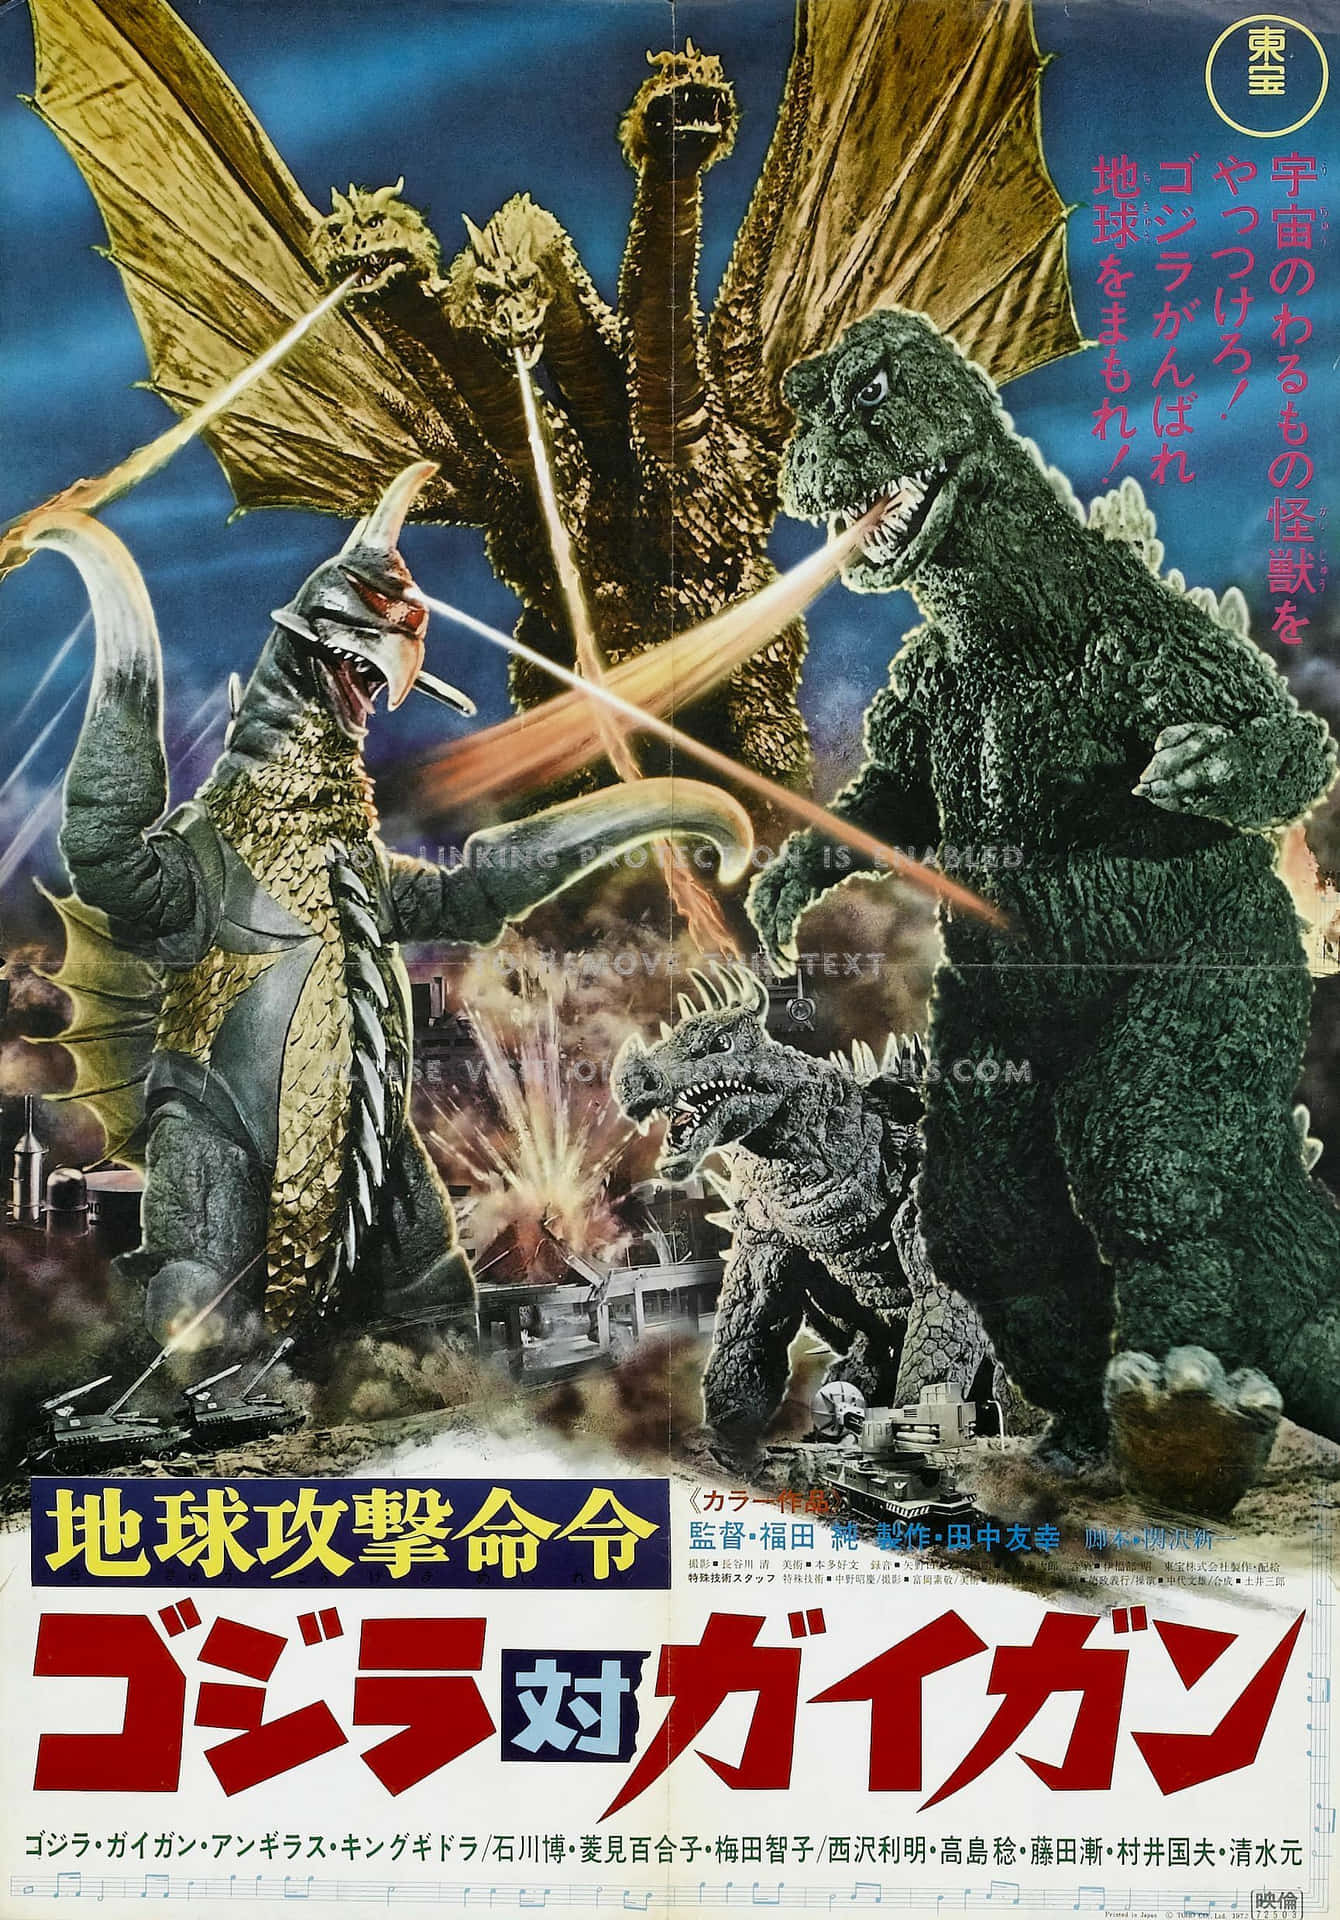 Gigan, the iconic kaiju from the Godzilla franchise Wallpaper